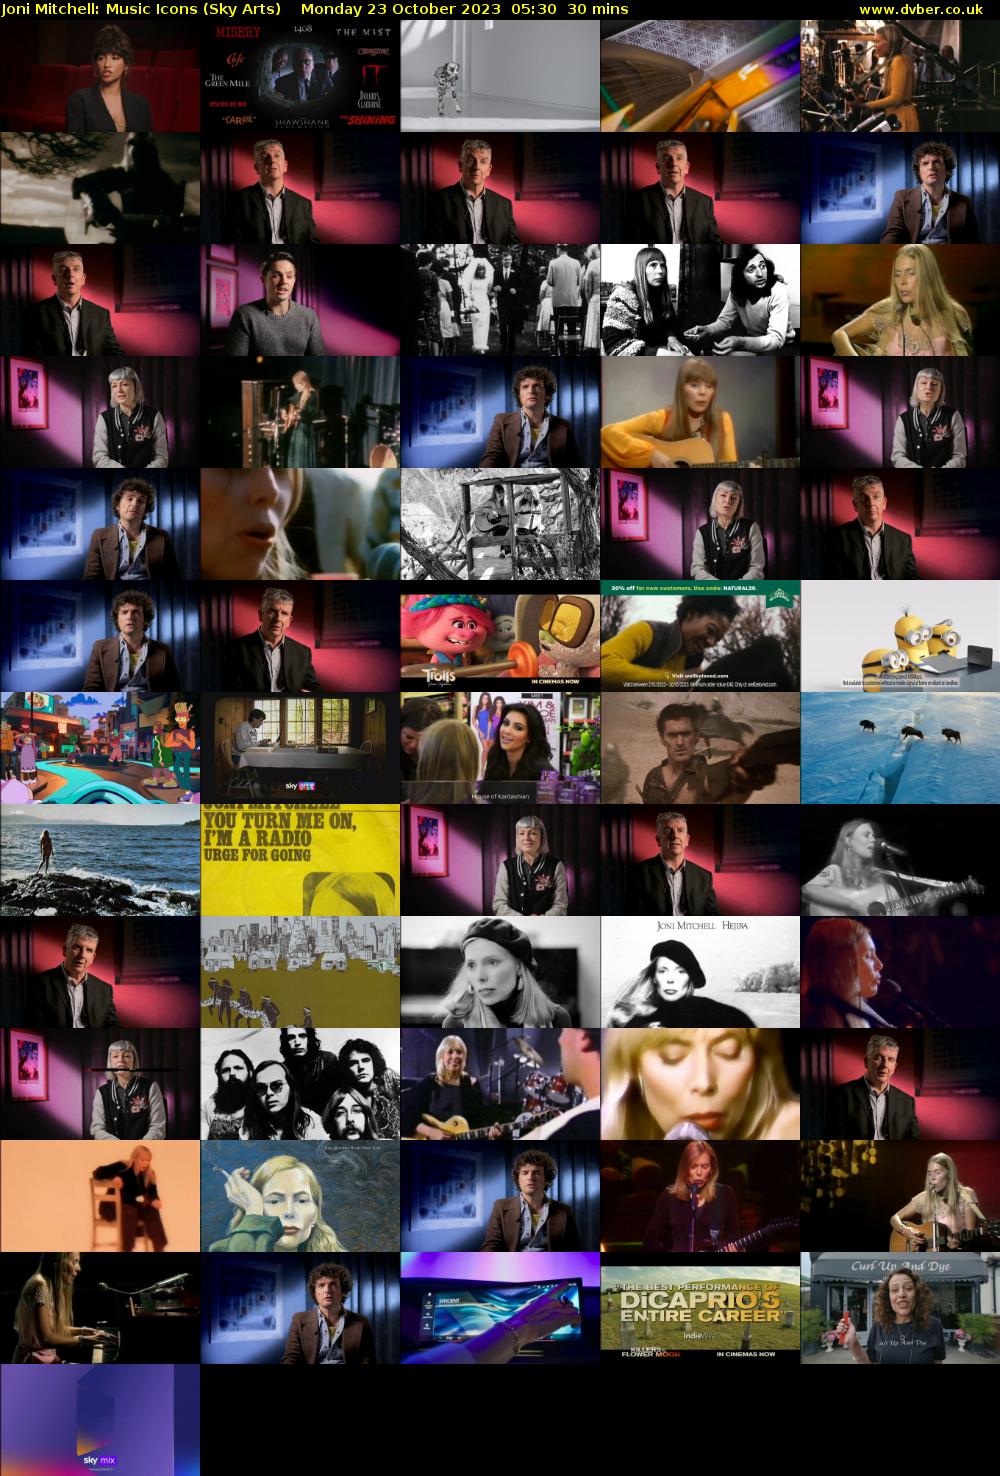 Joni Mitchell: Music Icons (Sky Arts) Monday 23 October 2023 05:30 - 06:00